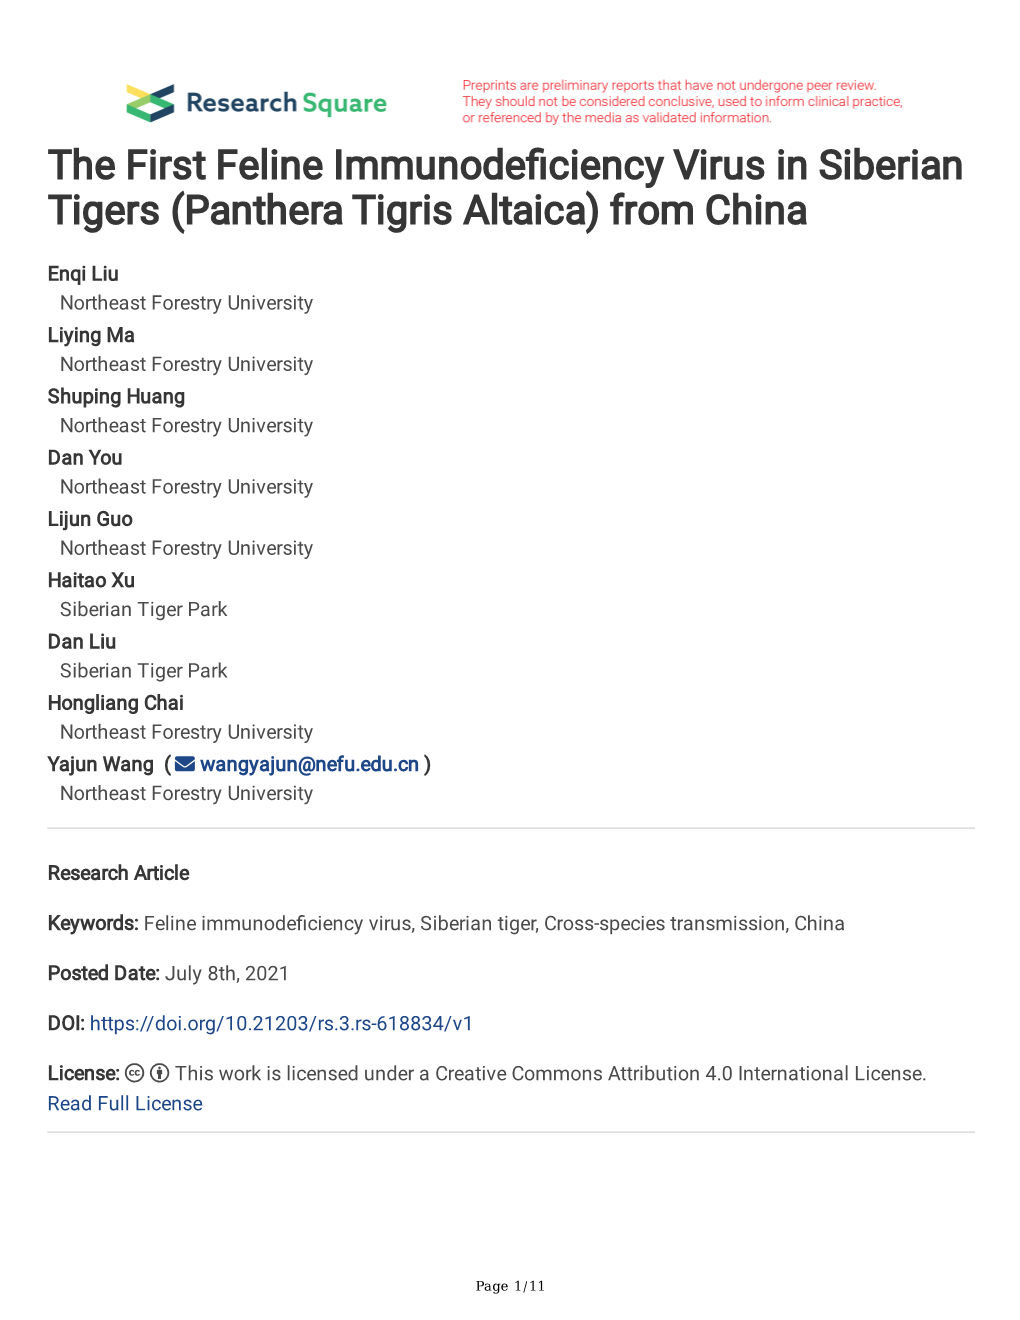 Panthera Tigris Altaica) from China